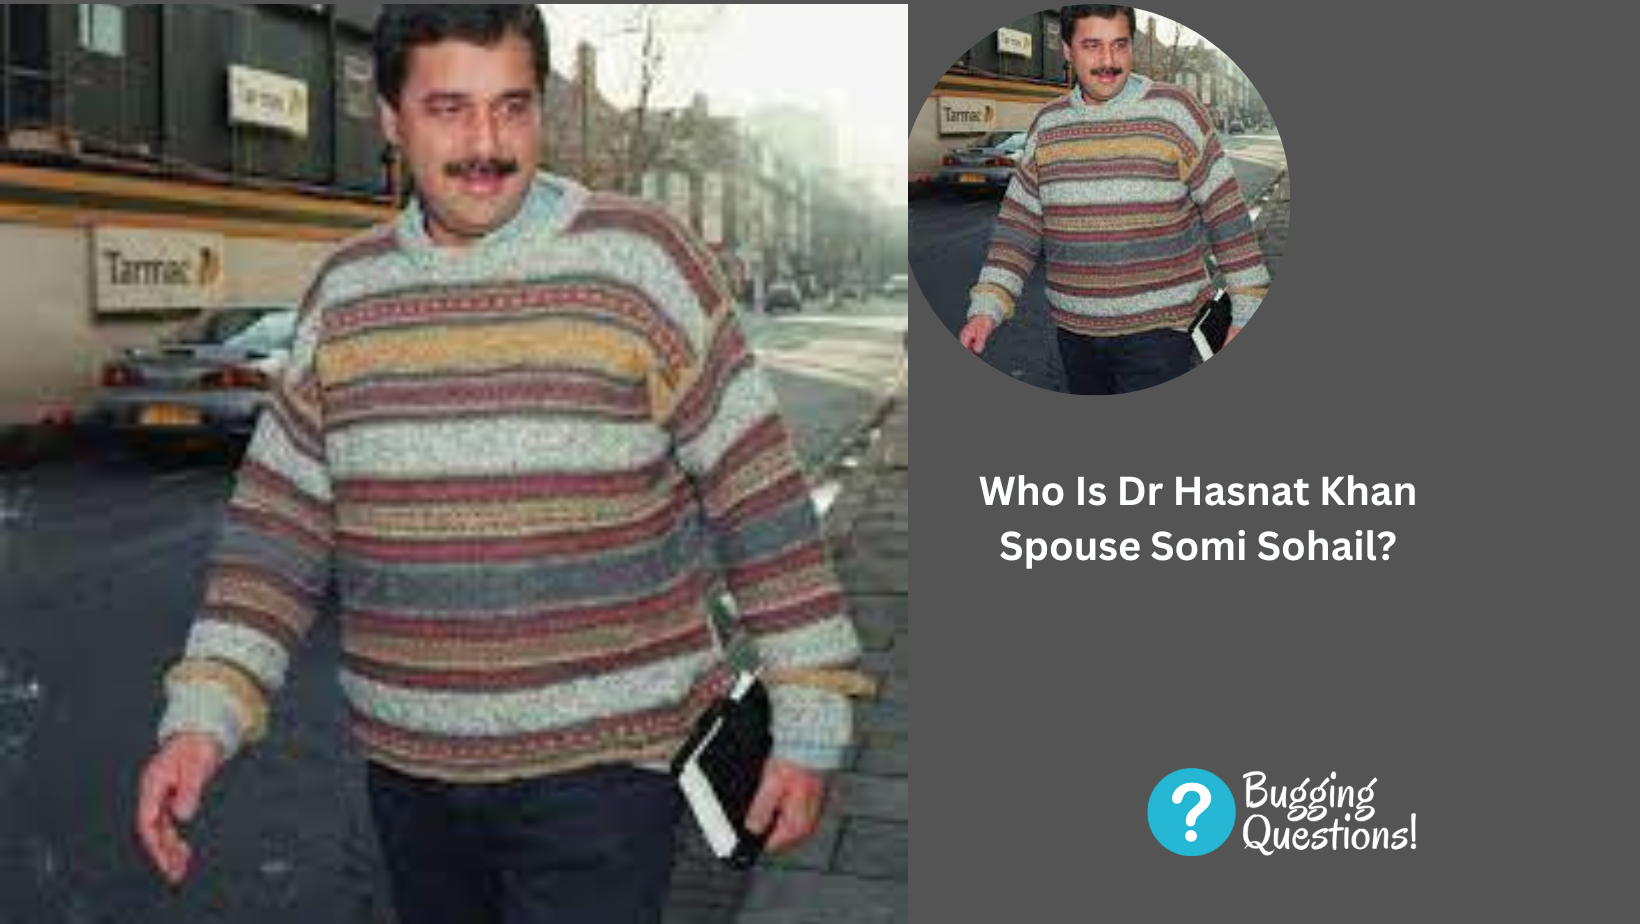 Who Is Dr Hasnat Khan Spouse Somi Sohail?